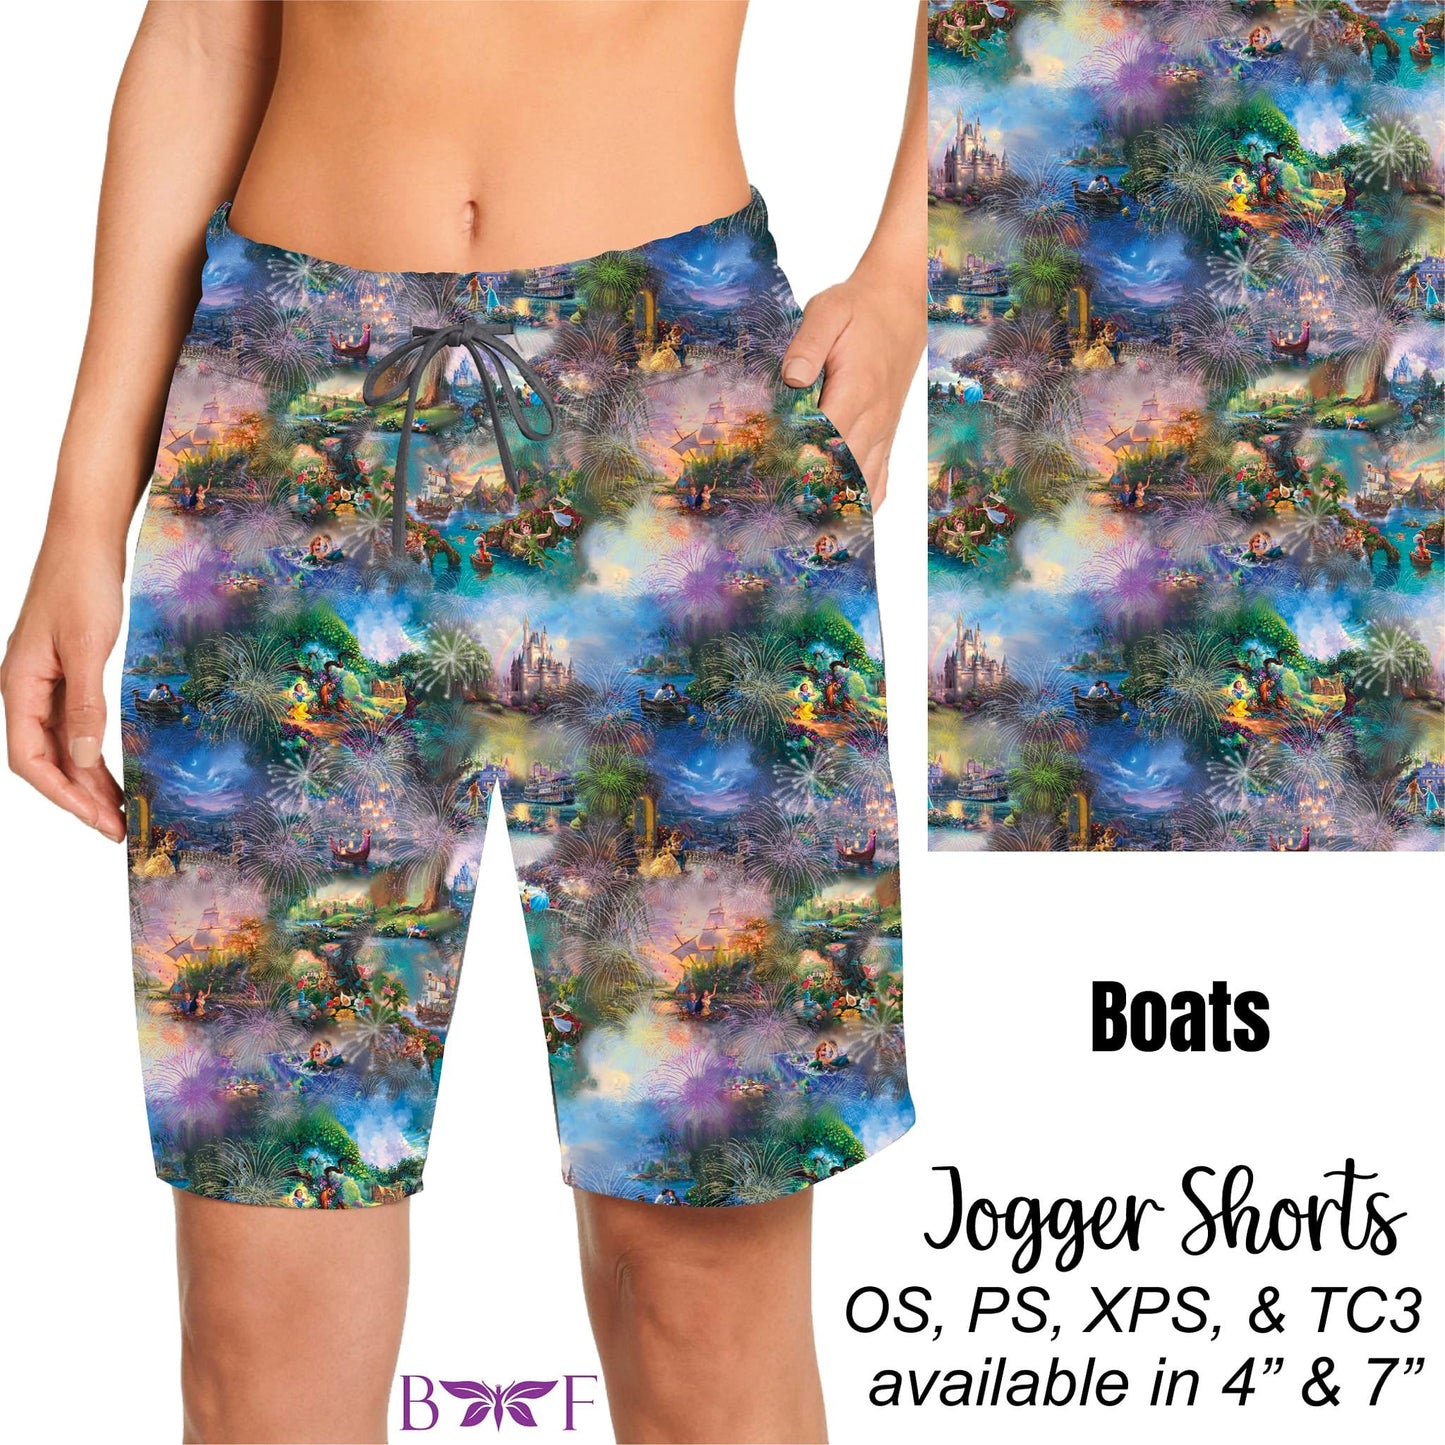 Boat Leggings ,Capris, Lounge Pants and shorts  Preorder #0330